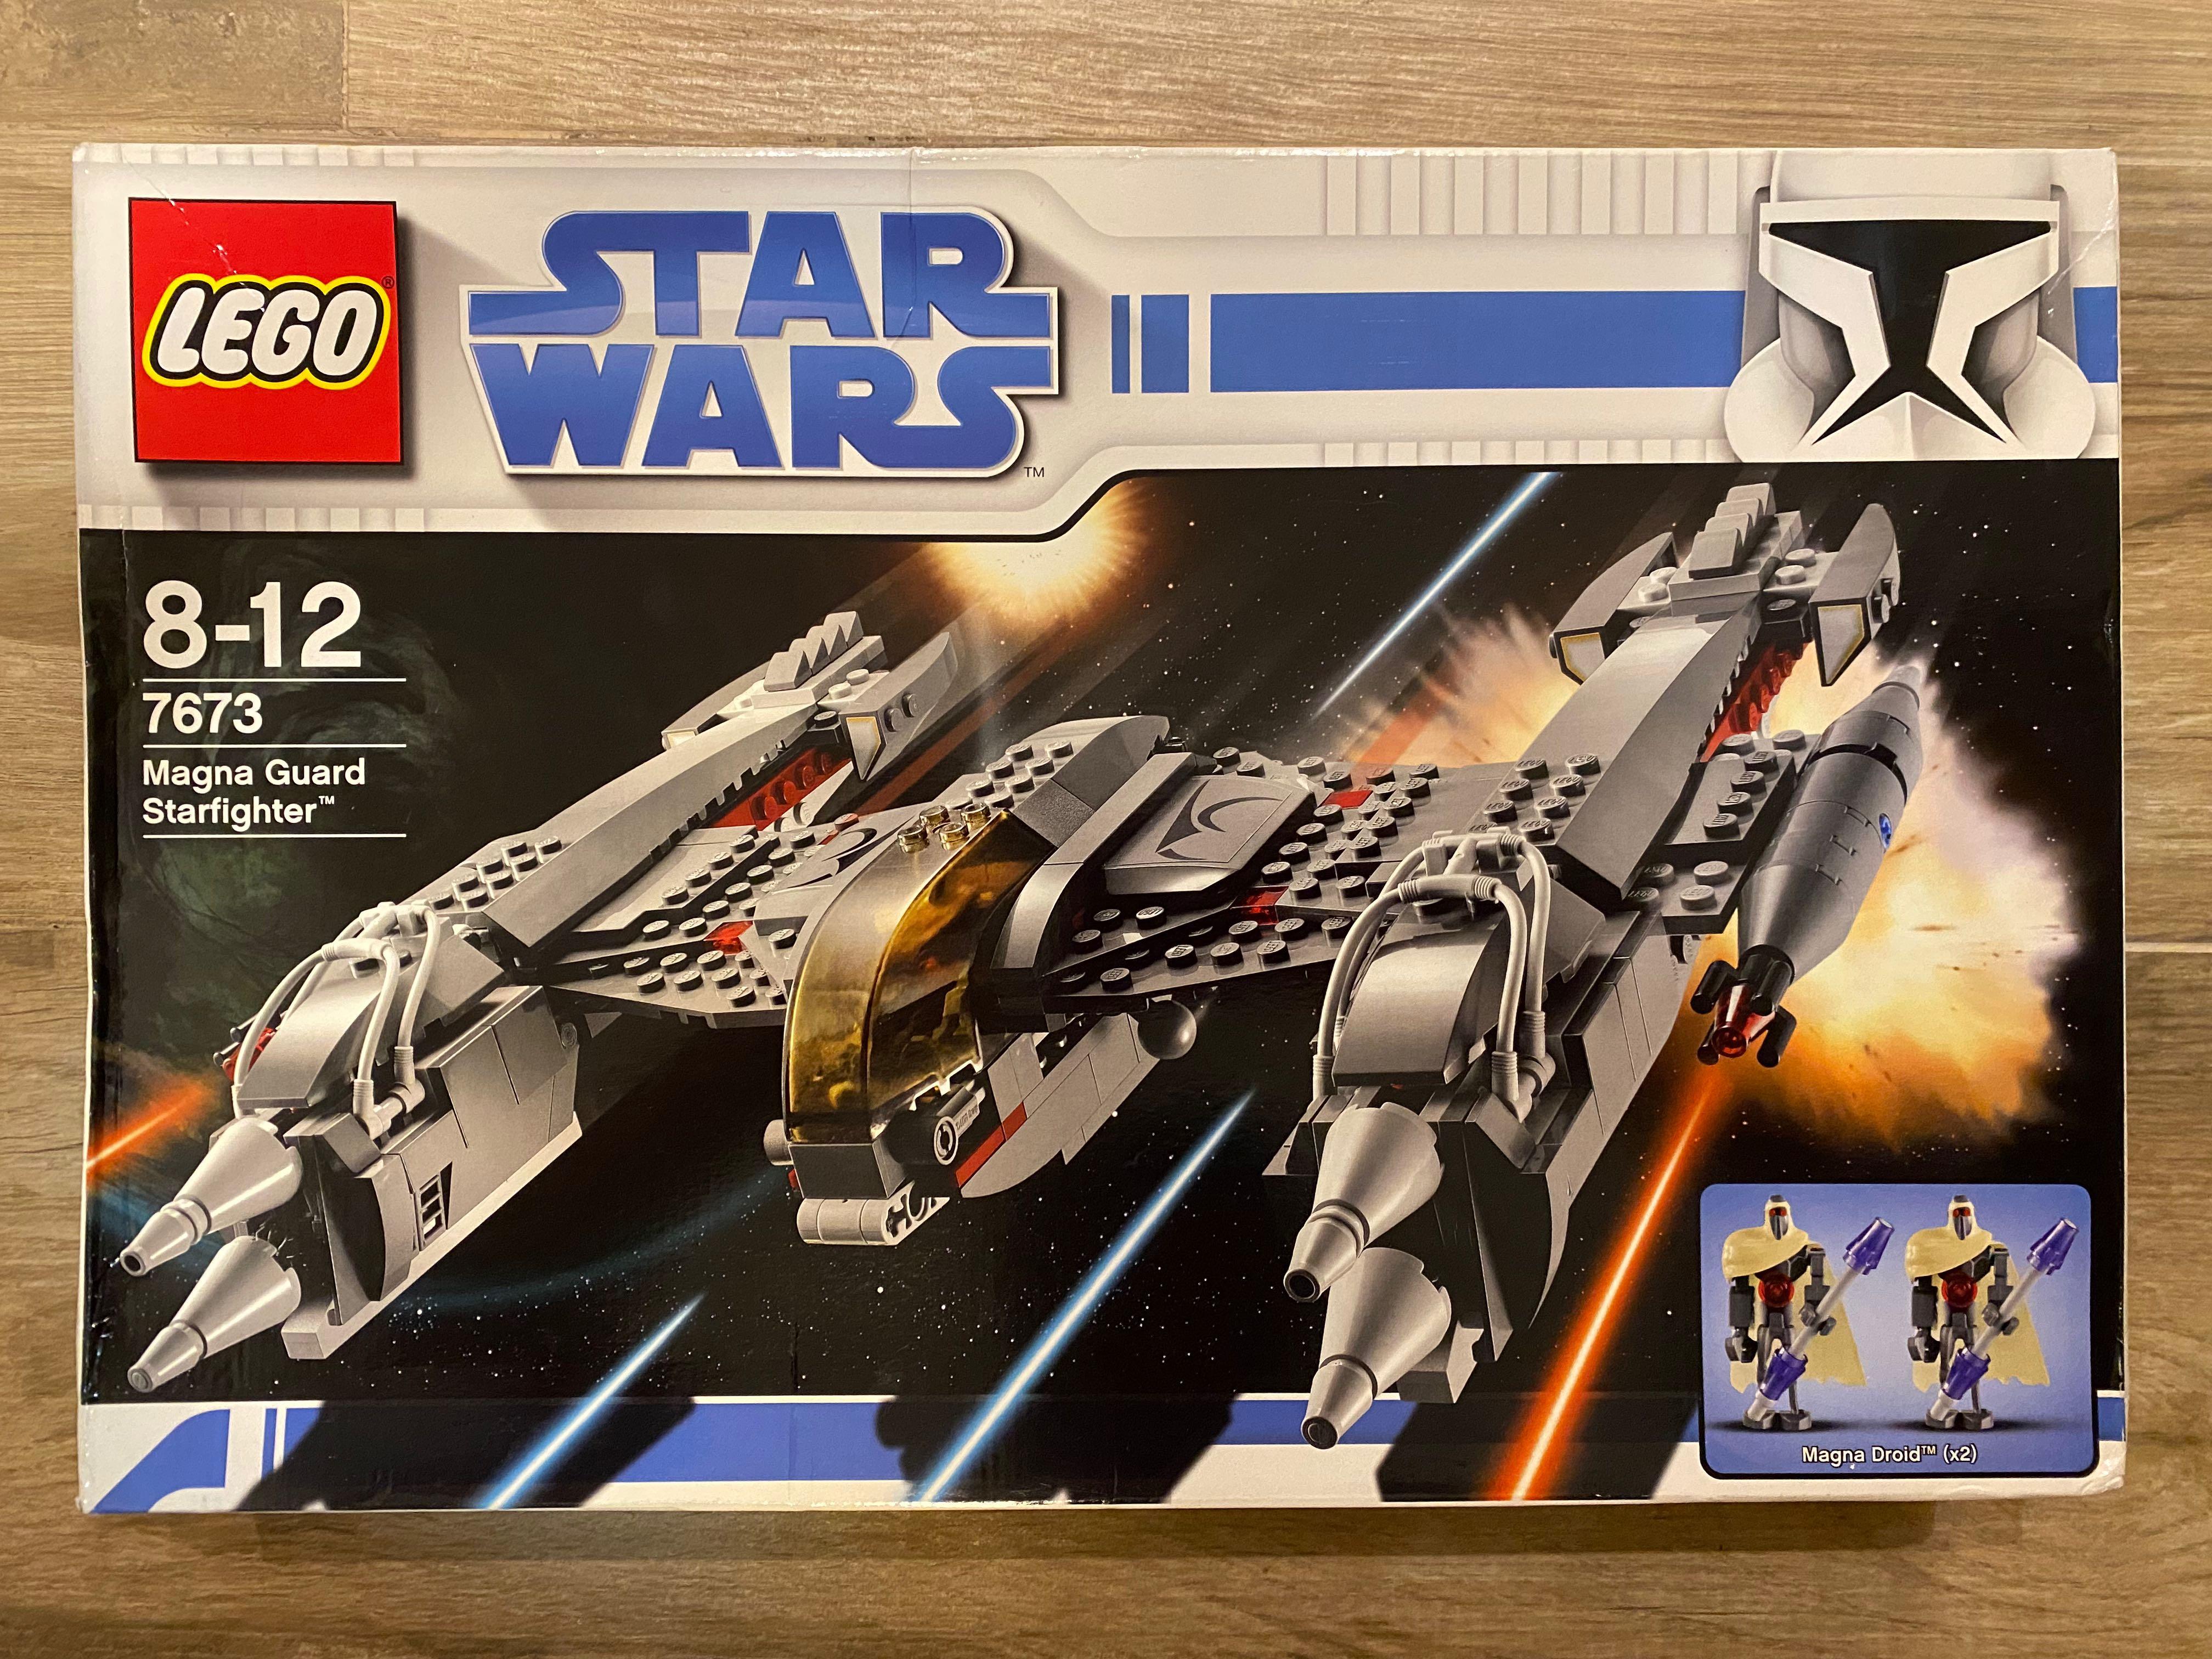 Lego Star Wars 7673 Magna Guard Starfighter The Clone Wars, 興趣及